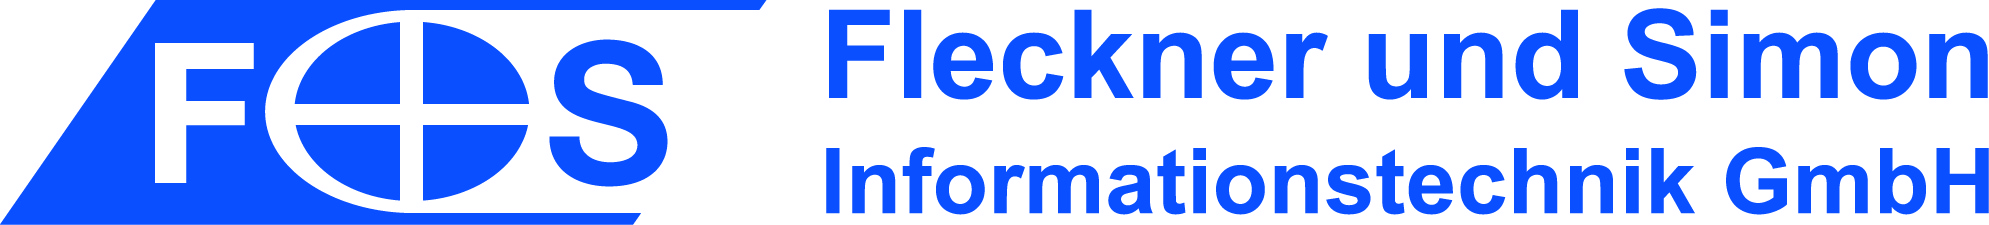 Logo Fleckner und Simon